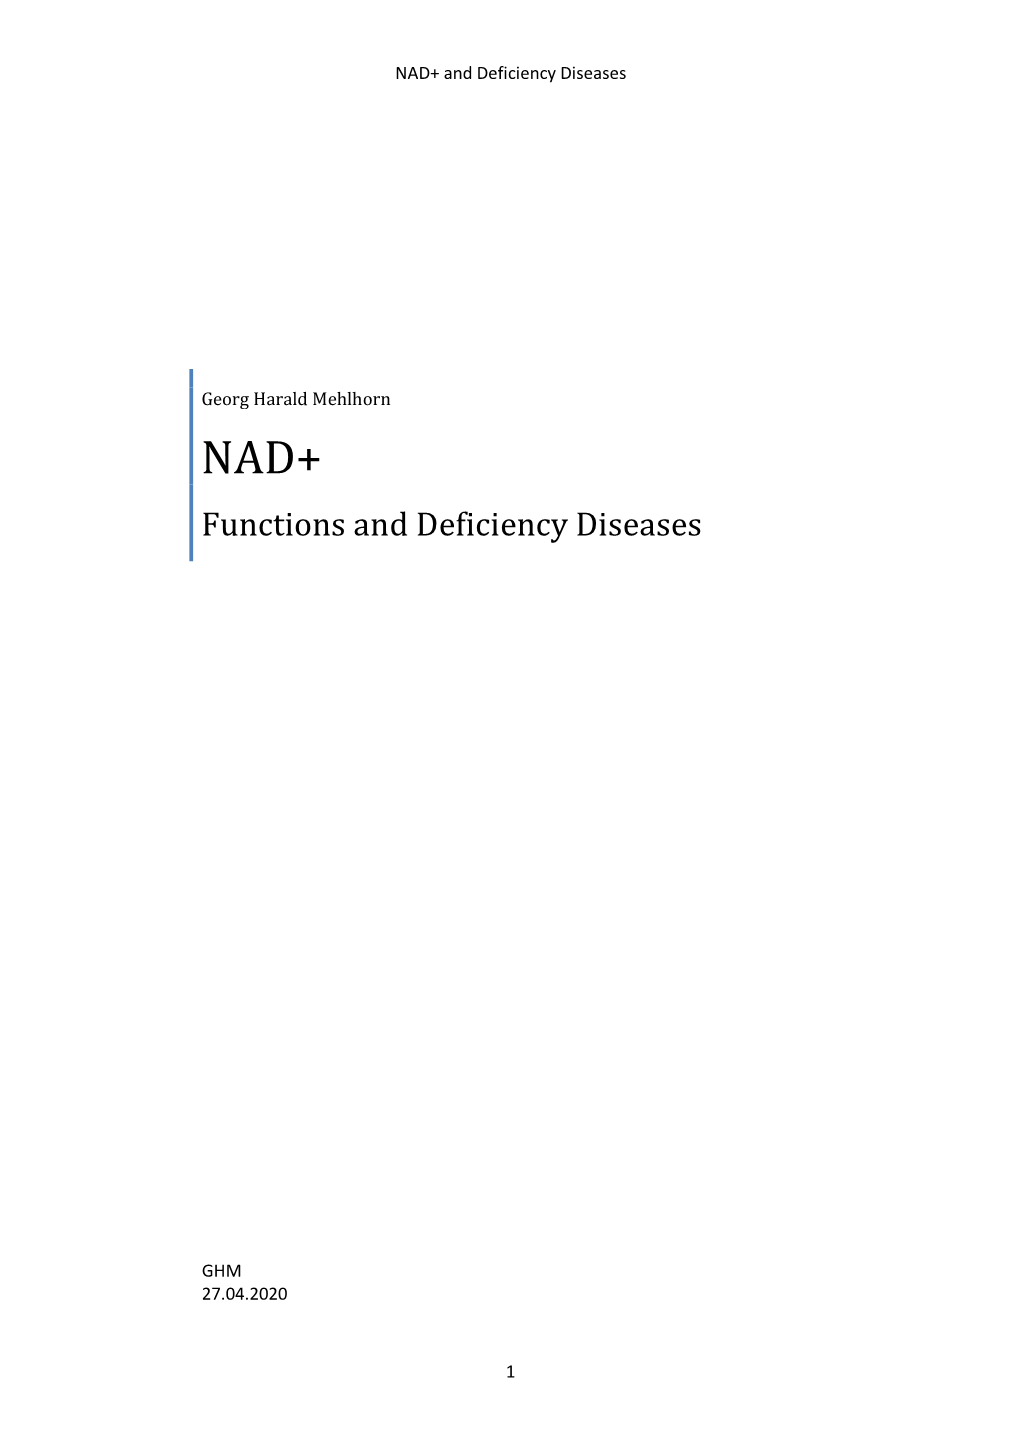 Functions and Deficiency Diseases